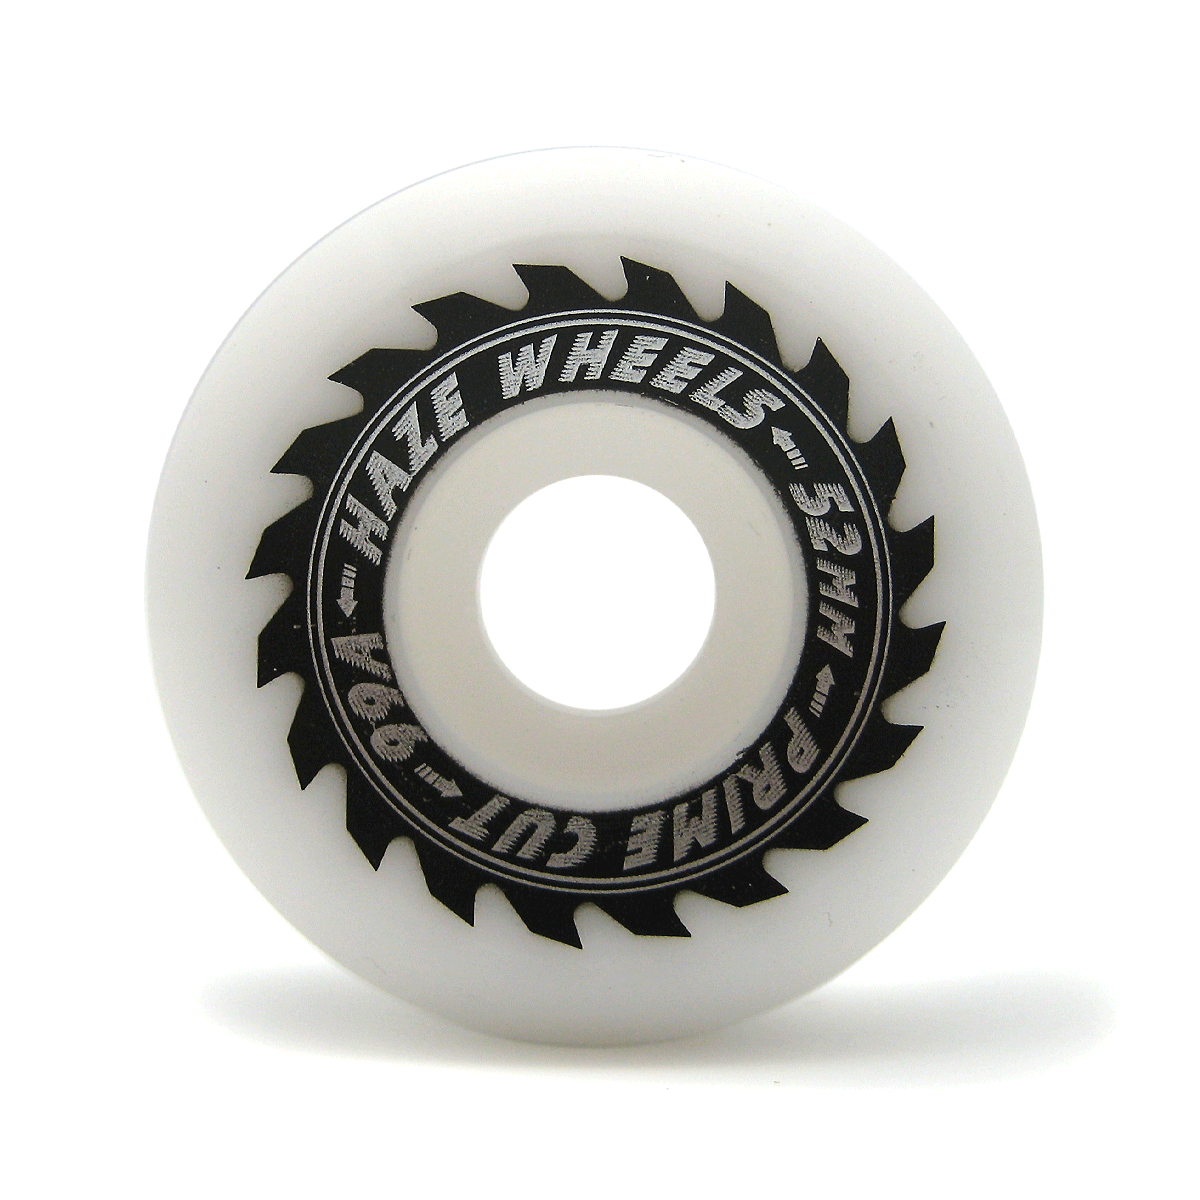 Haze wheels Prime Cut 52mm 99a